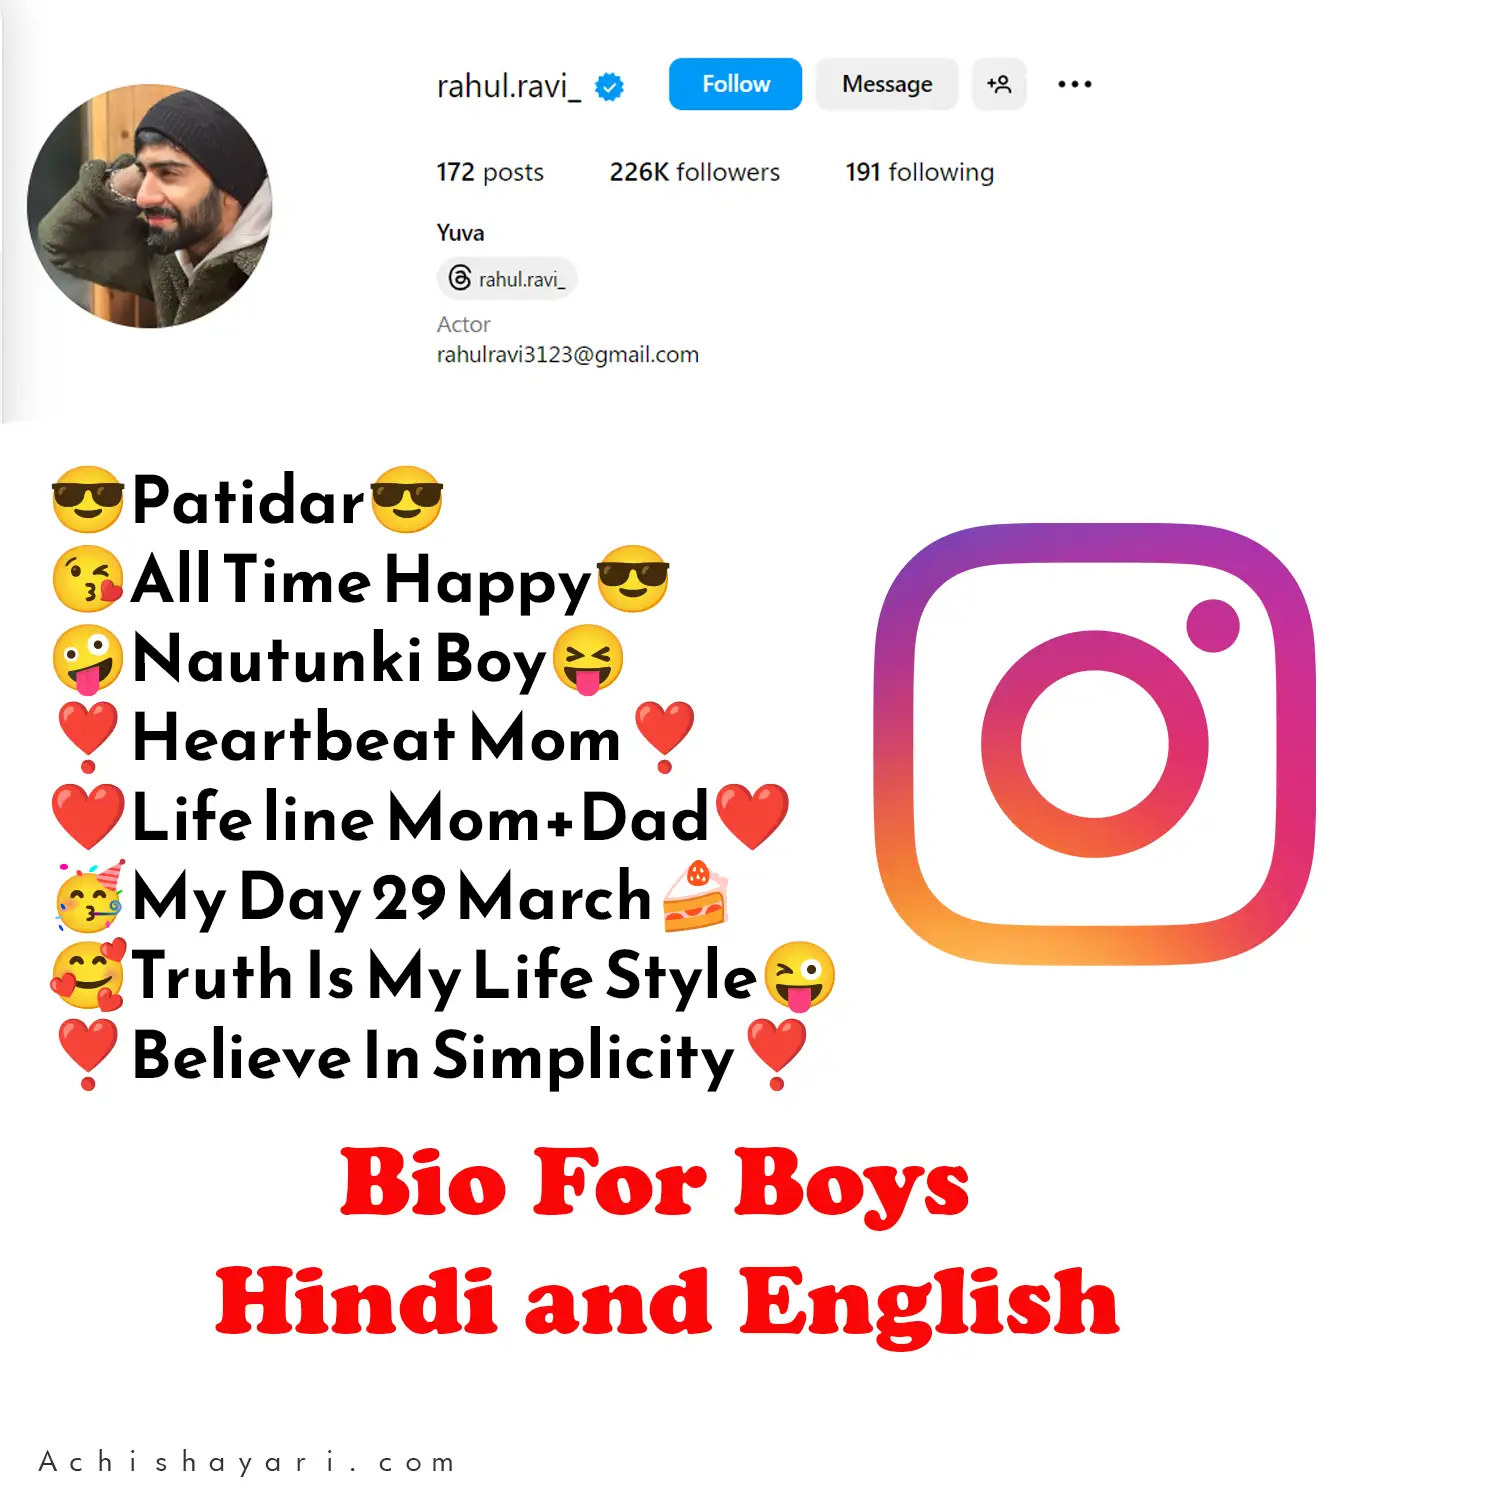 Boy Bio For Instagram